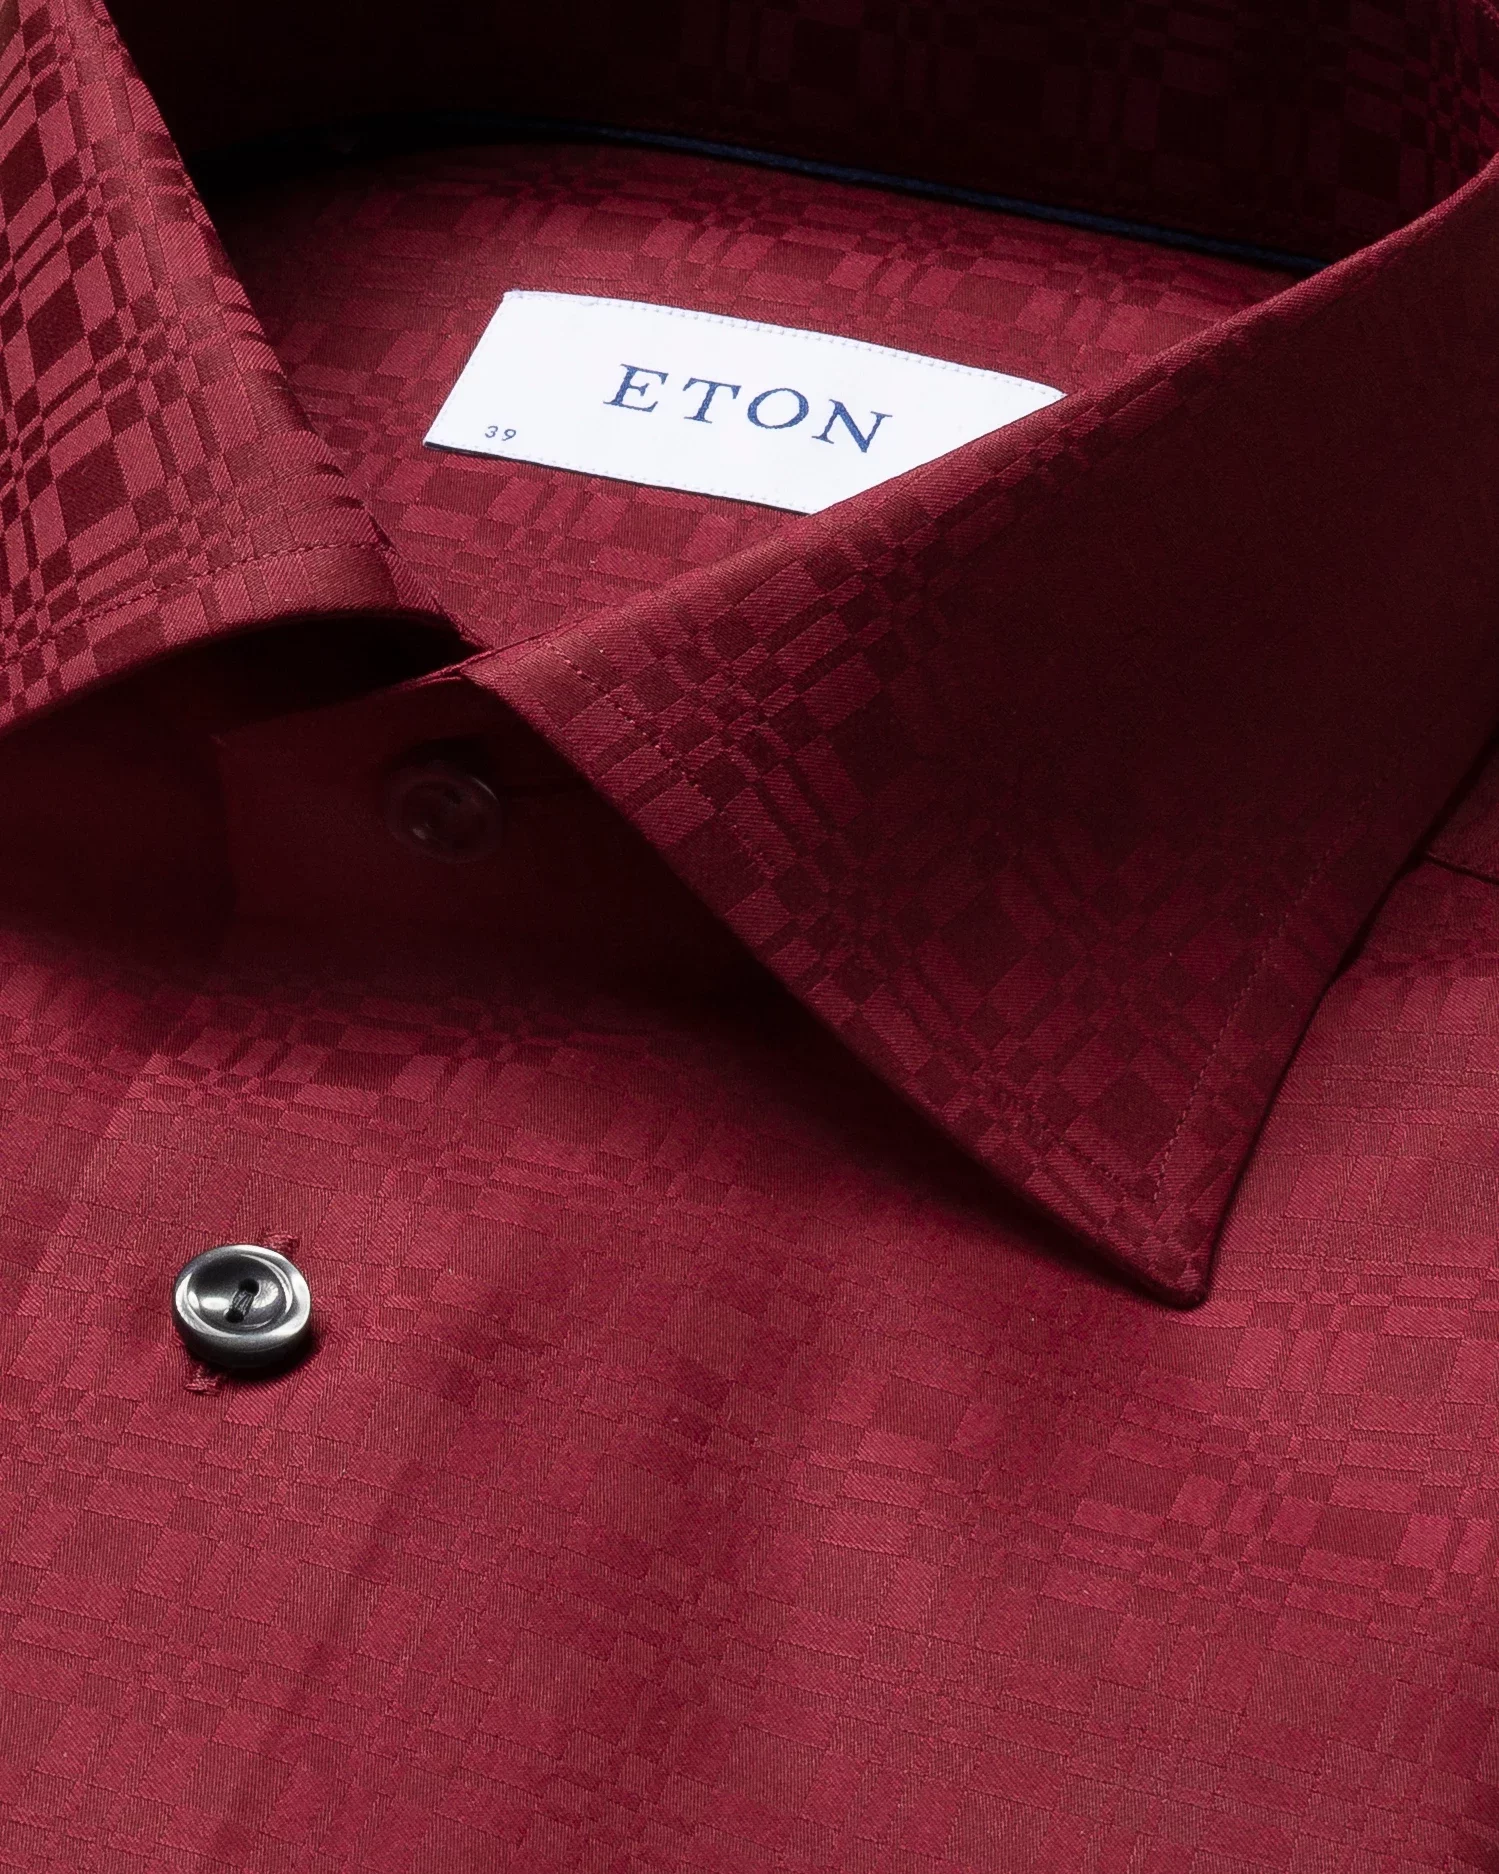 Eton - red brocade tuxedo shirt